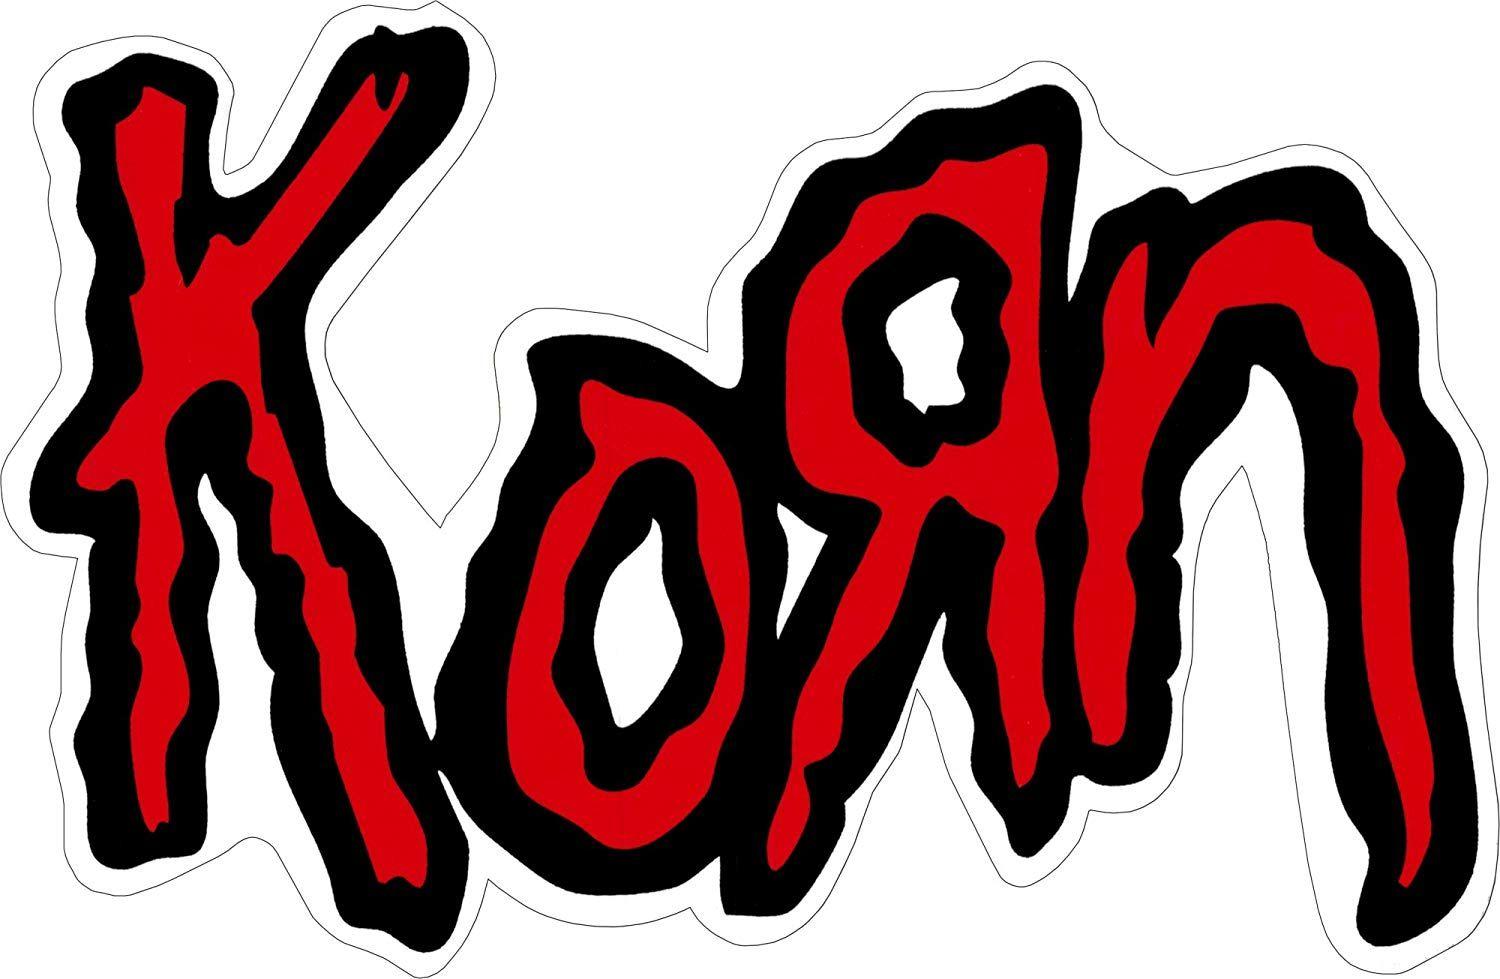 Red Black White Logo - Korn, Black & White Classic Logo Decal